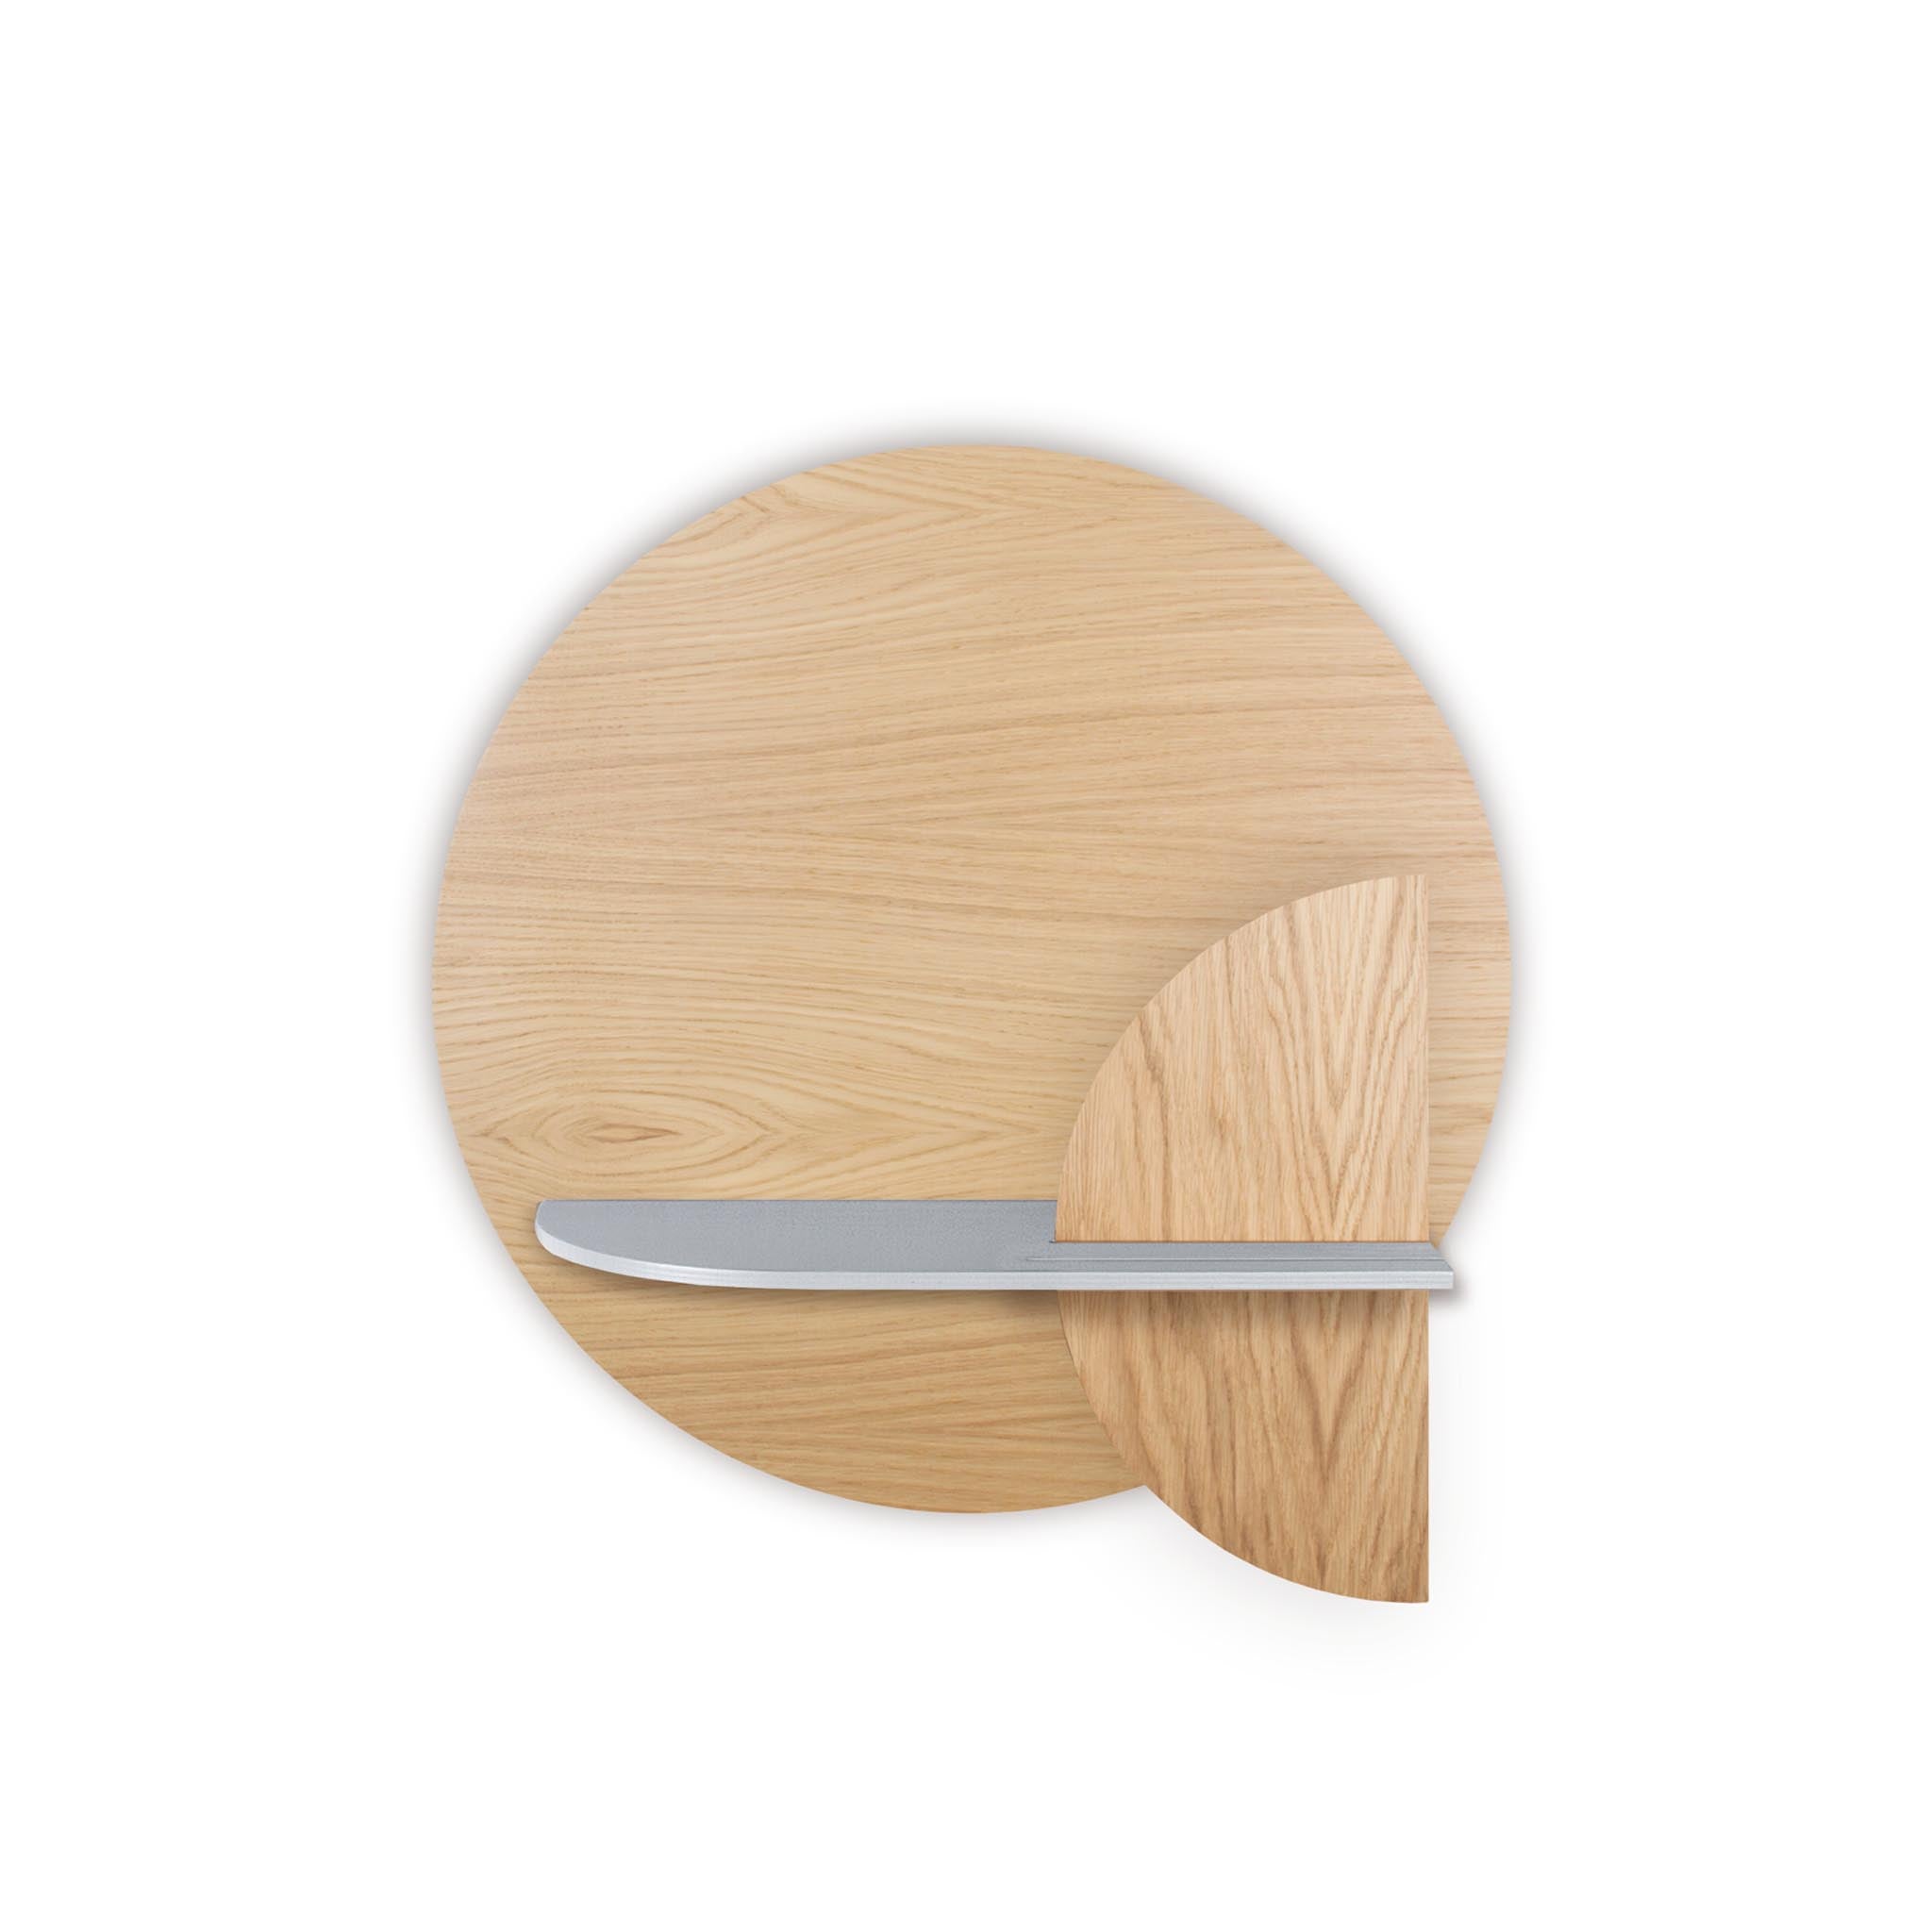 Alba wall shelf · Oak circle